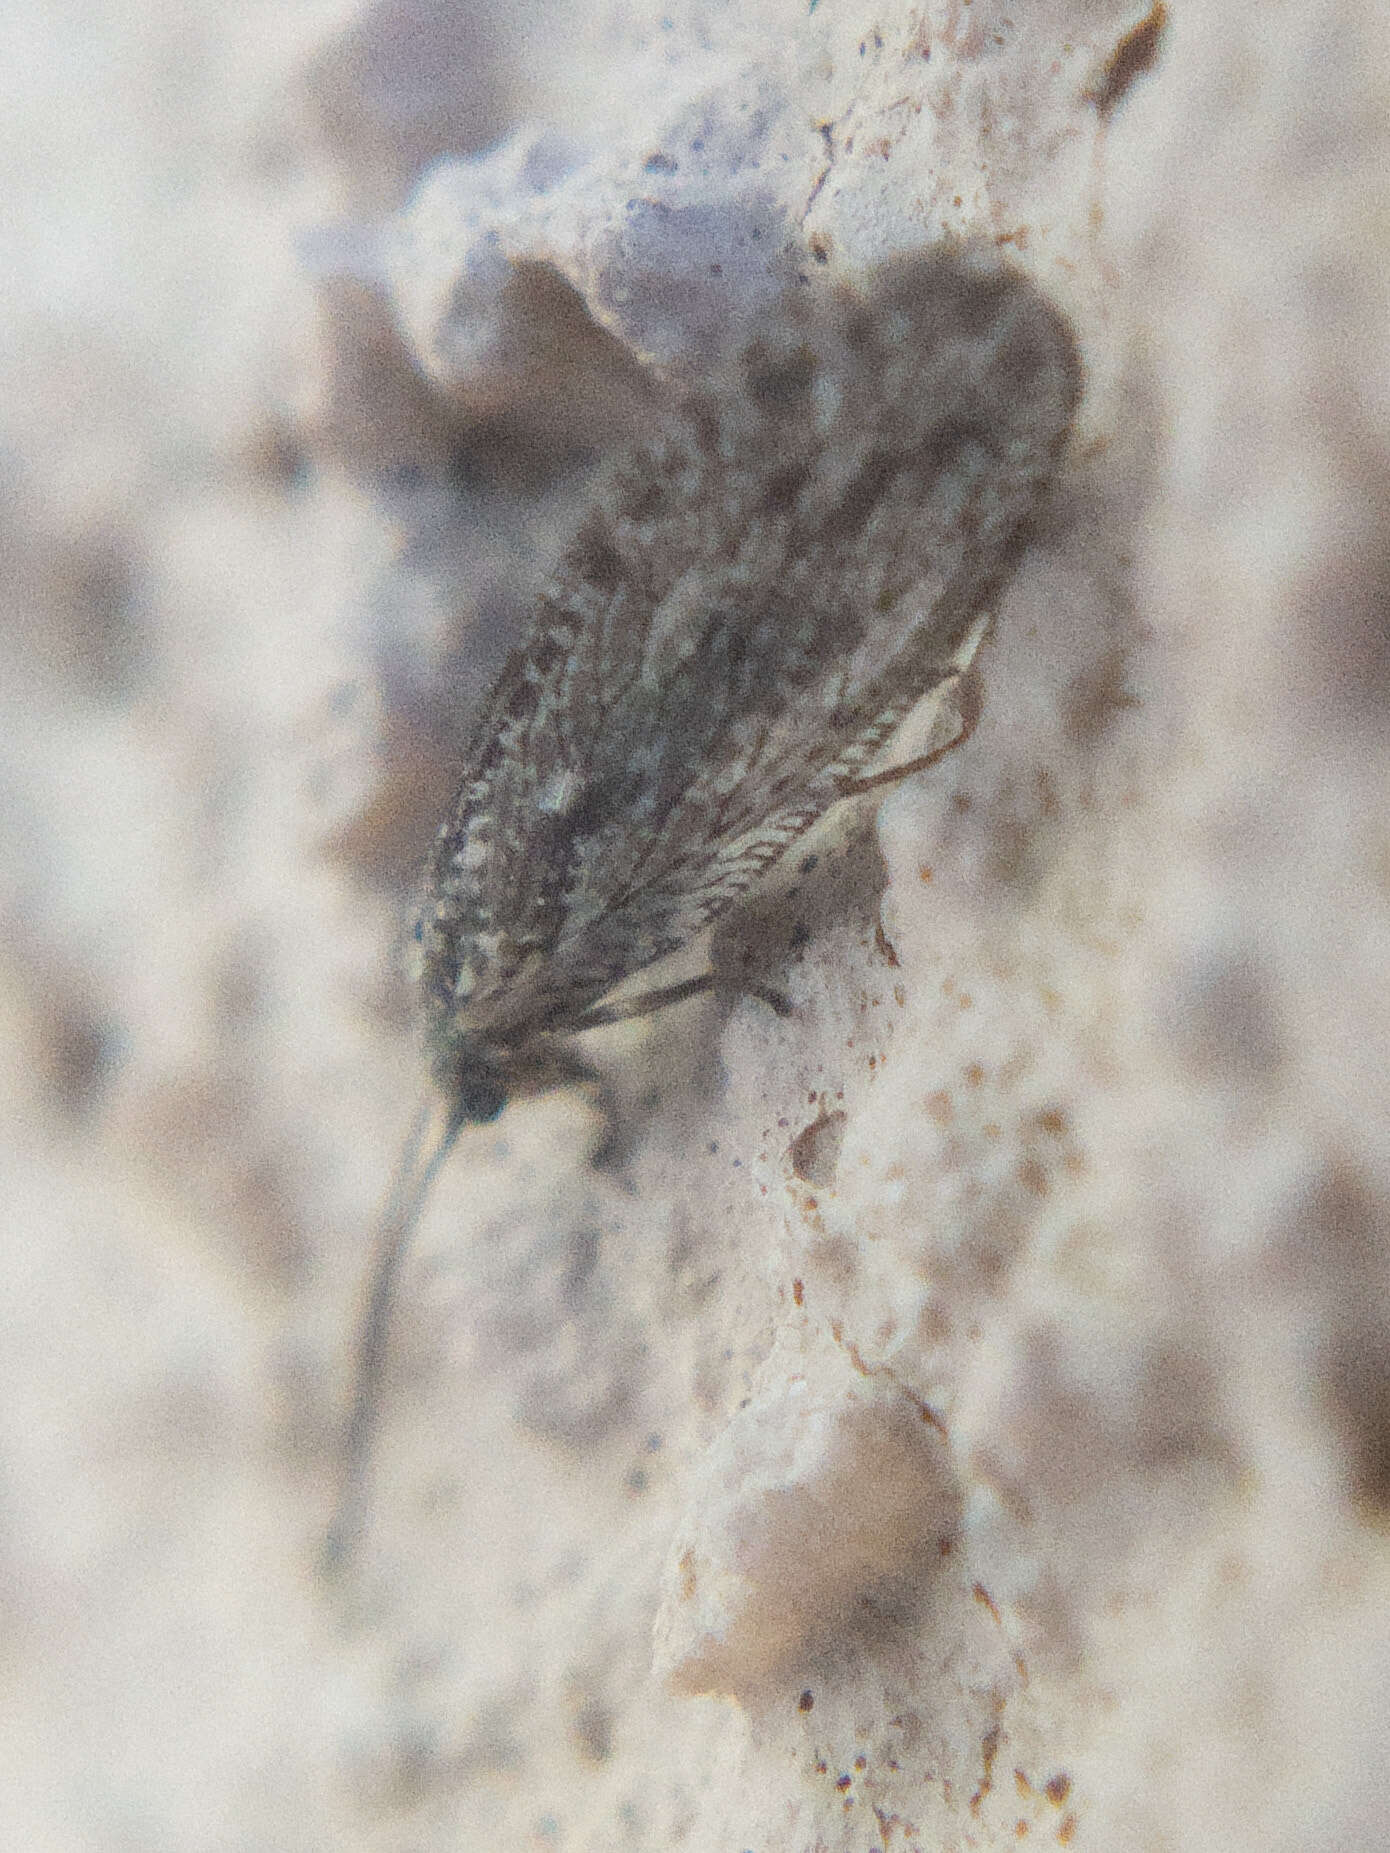 Image of Micromus variolosus Hagen 1886